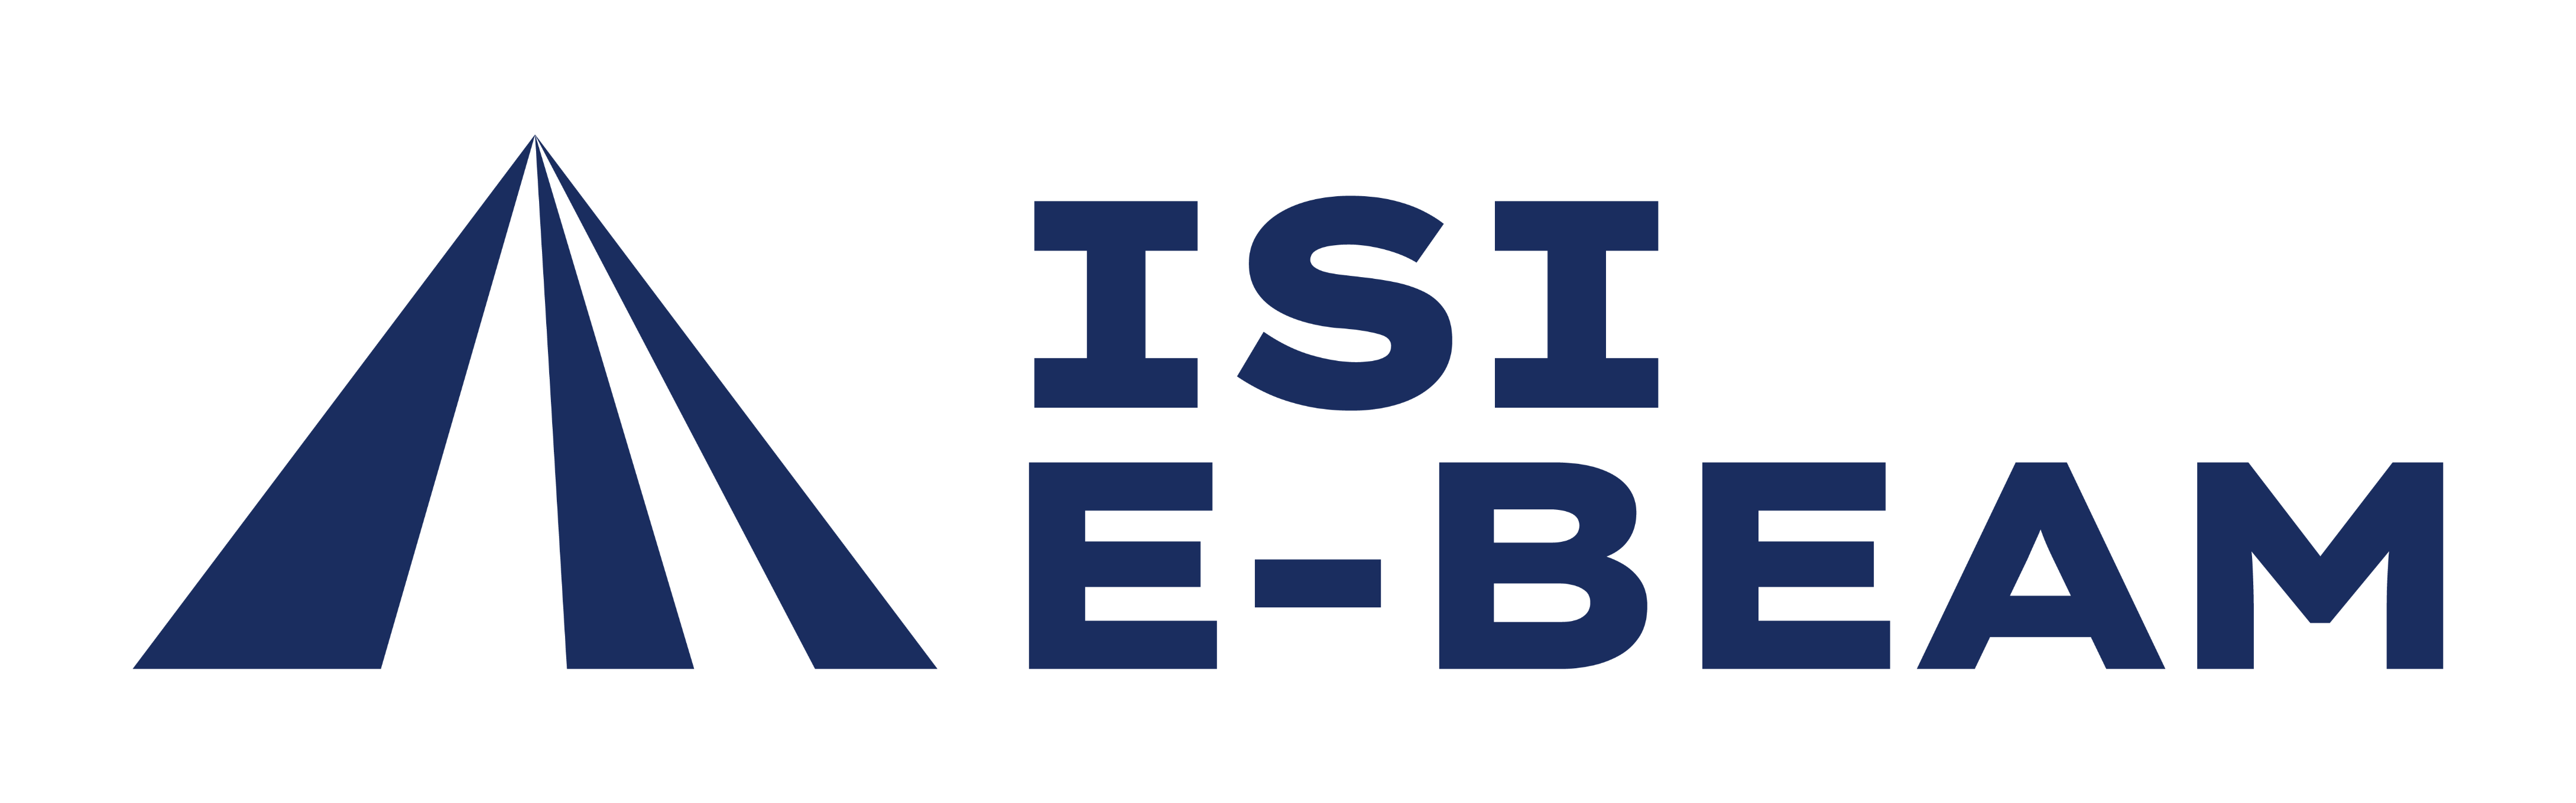 ISI-EBEAM